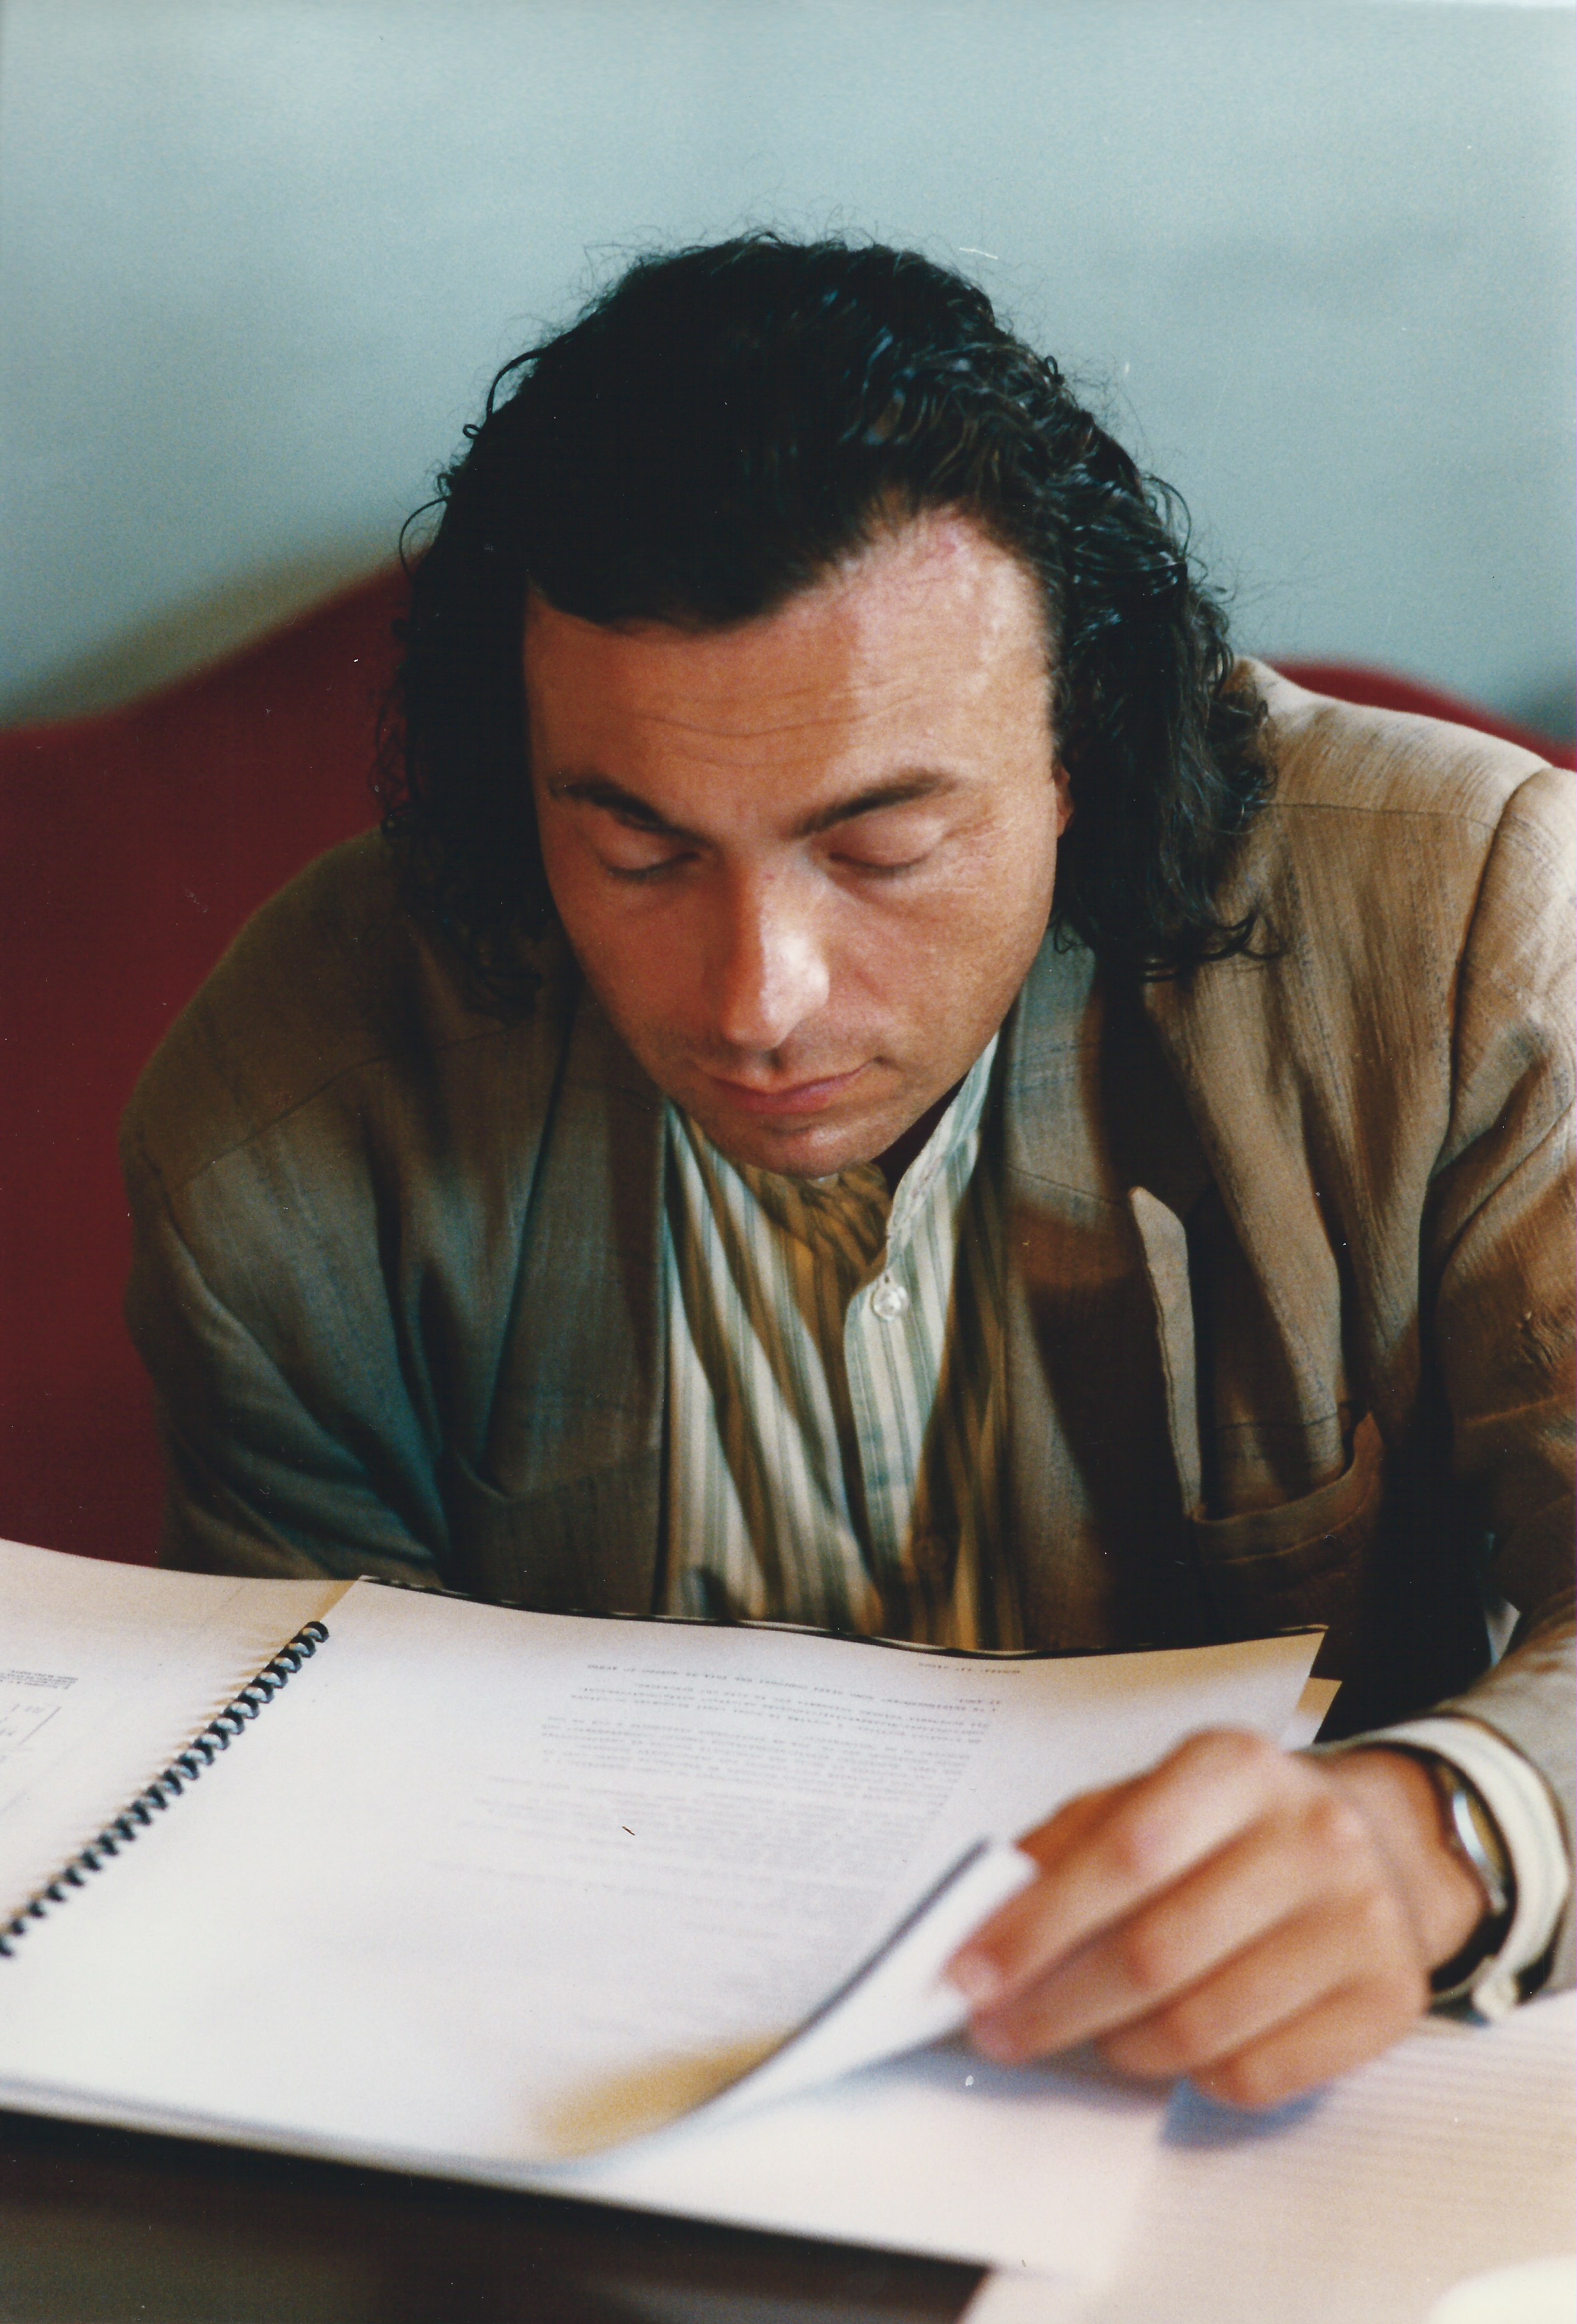 ALBERTO CAPRIOLI. JURY PANEL OF THE “2 AGOSTO” INTERNATIONAL COMPOSING COMPETITION, BOLOGNA, I EDITION 1995, PHOTO PRIMO GNANI